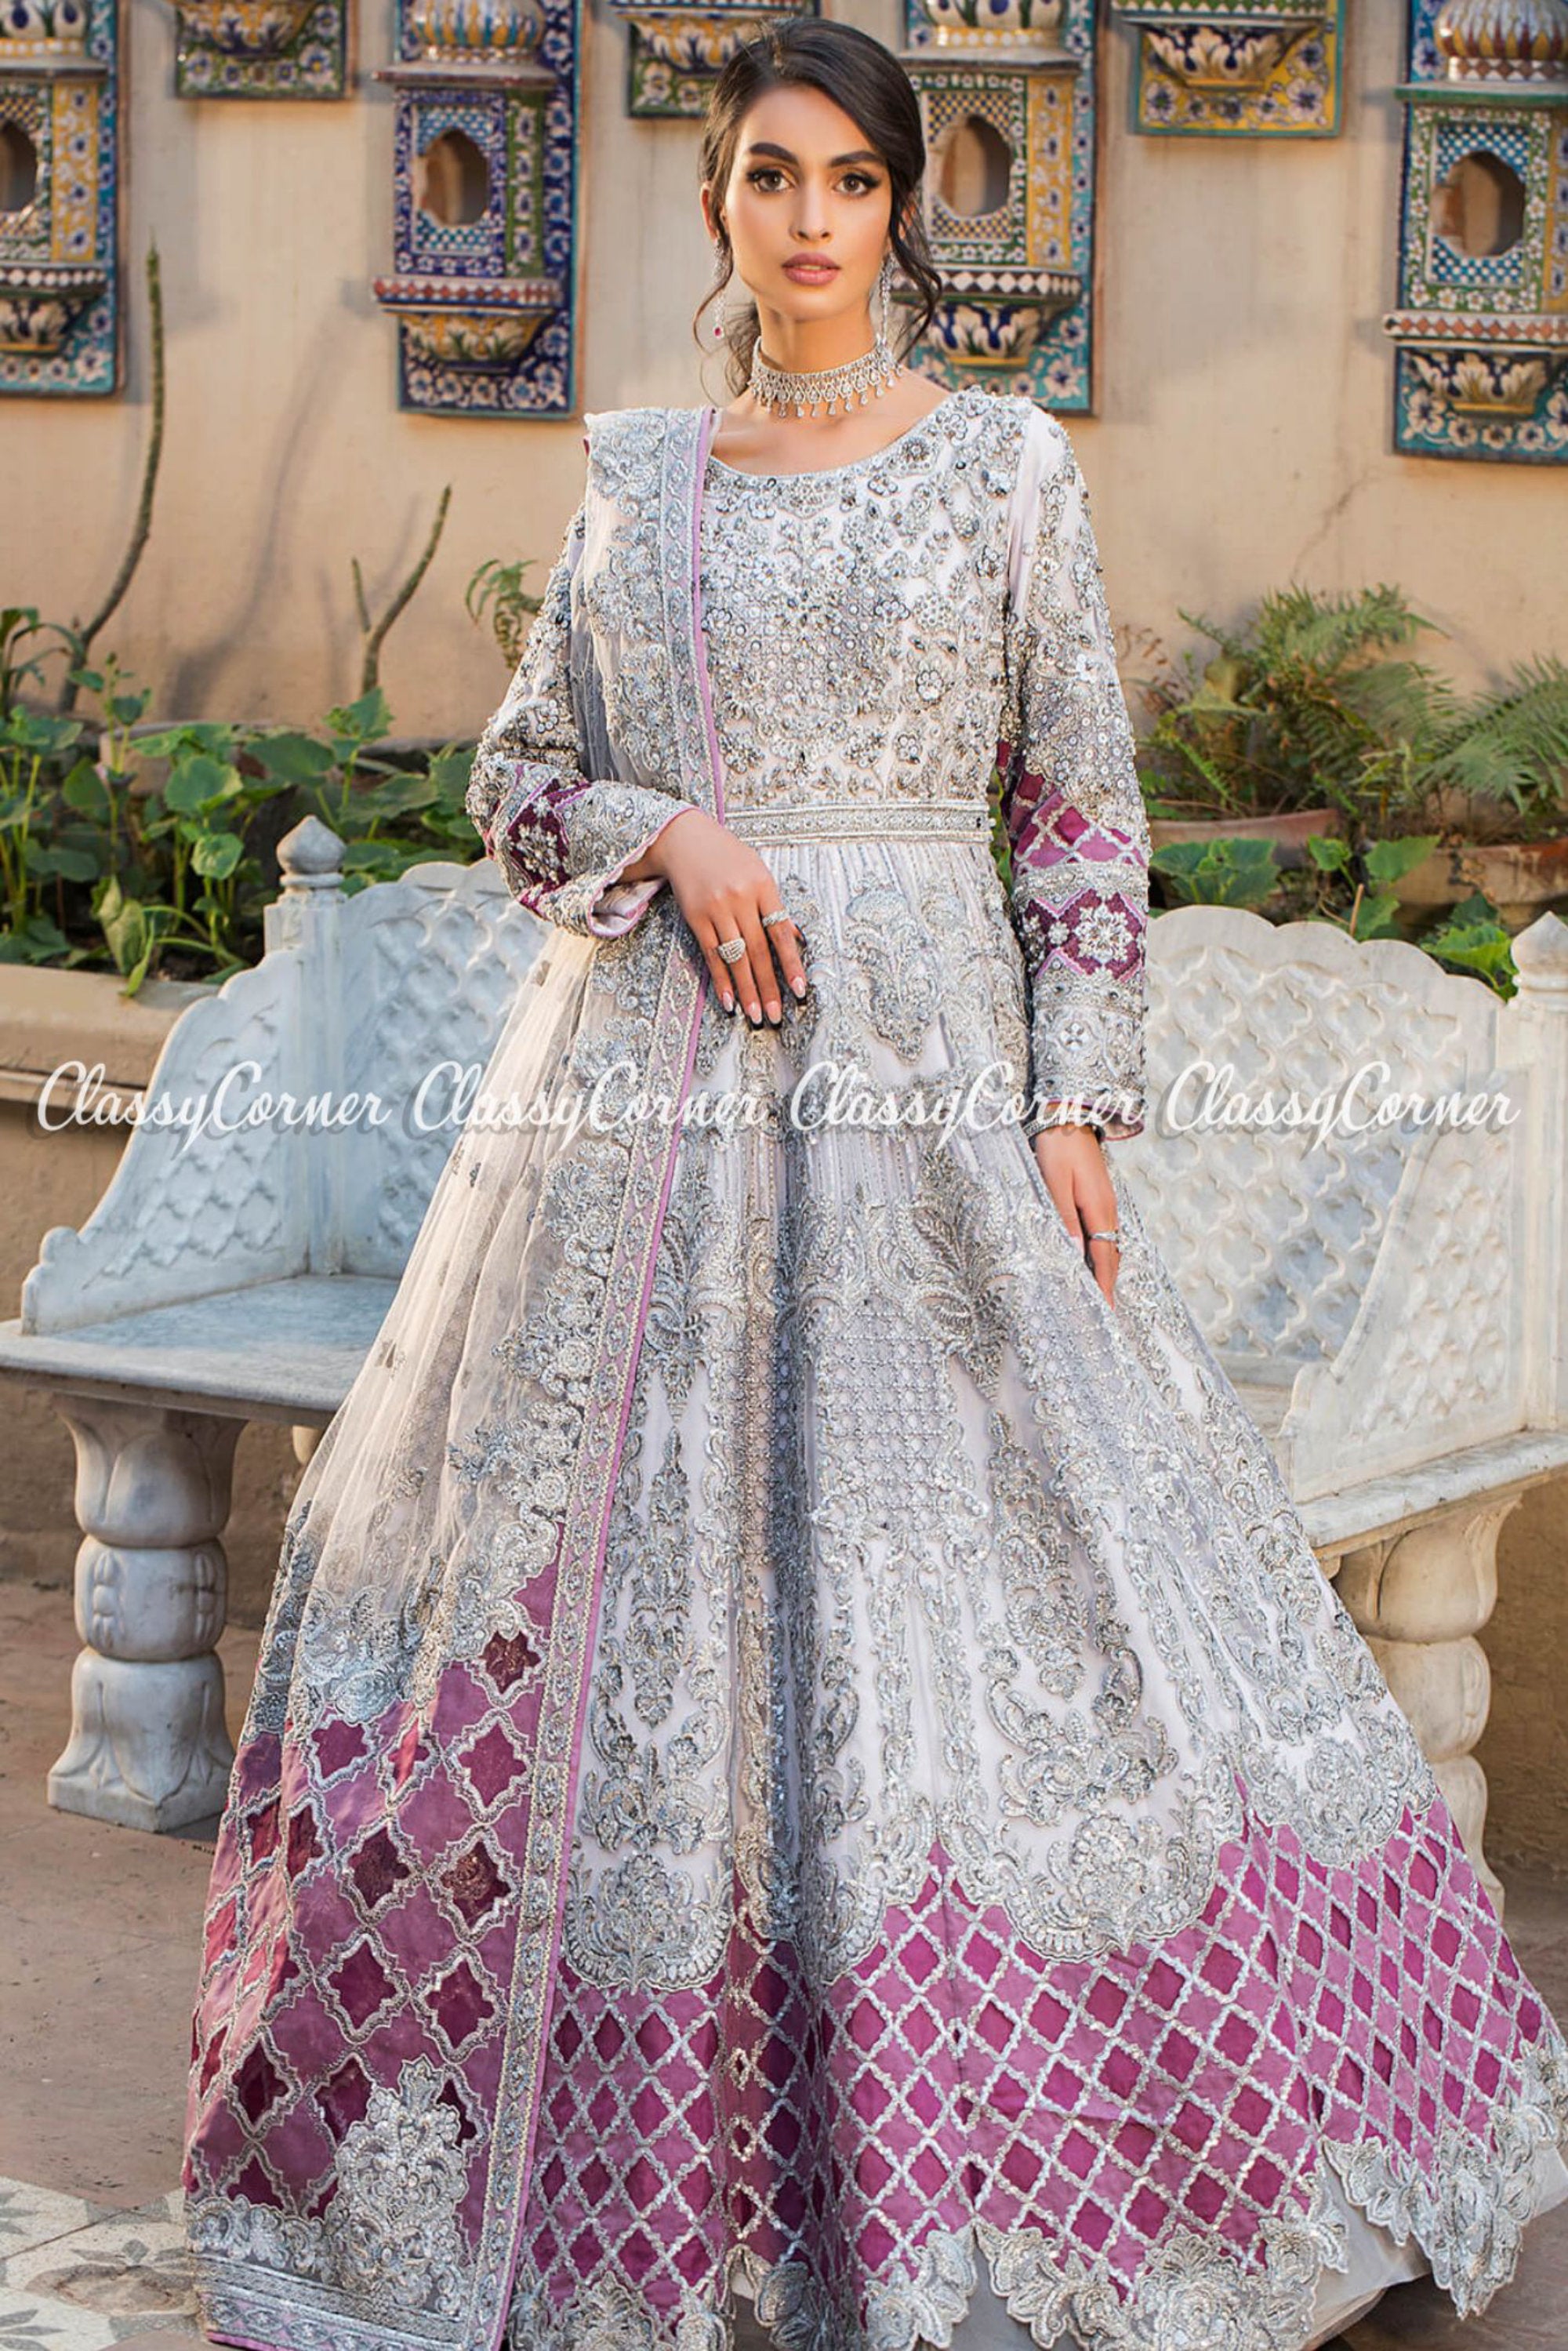 New Indian Wear Salwar Kameez Pakistani Dress Party Suit Wedding Long Style  Gown | eBay